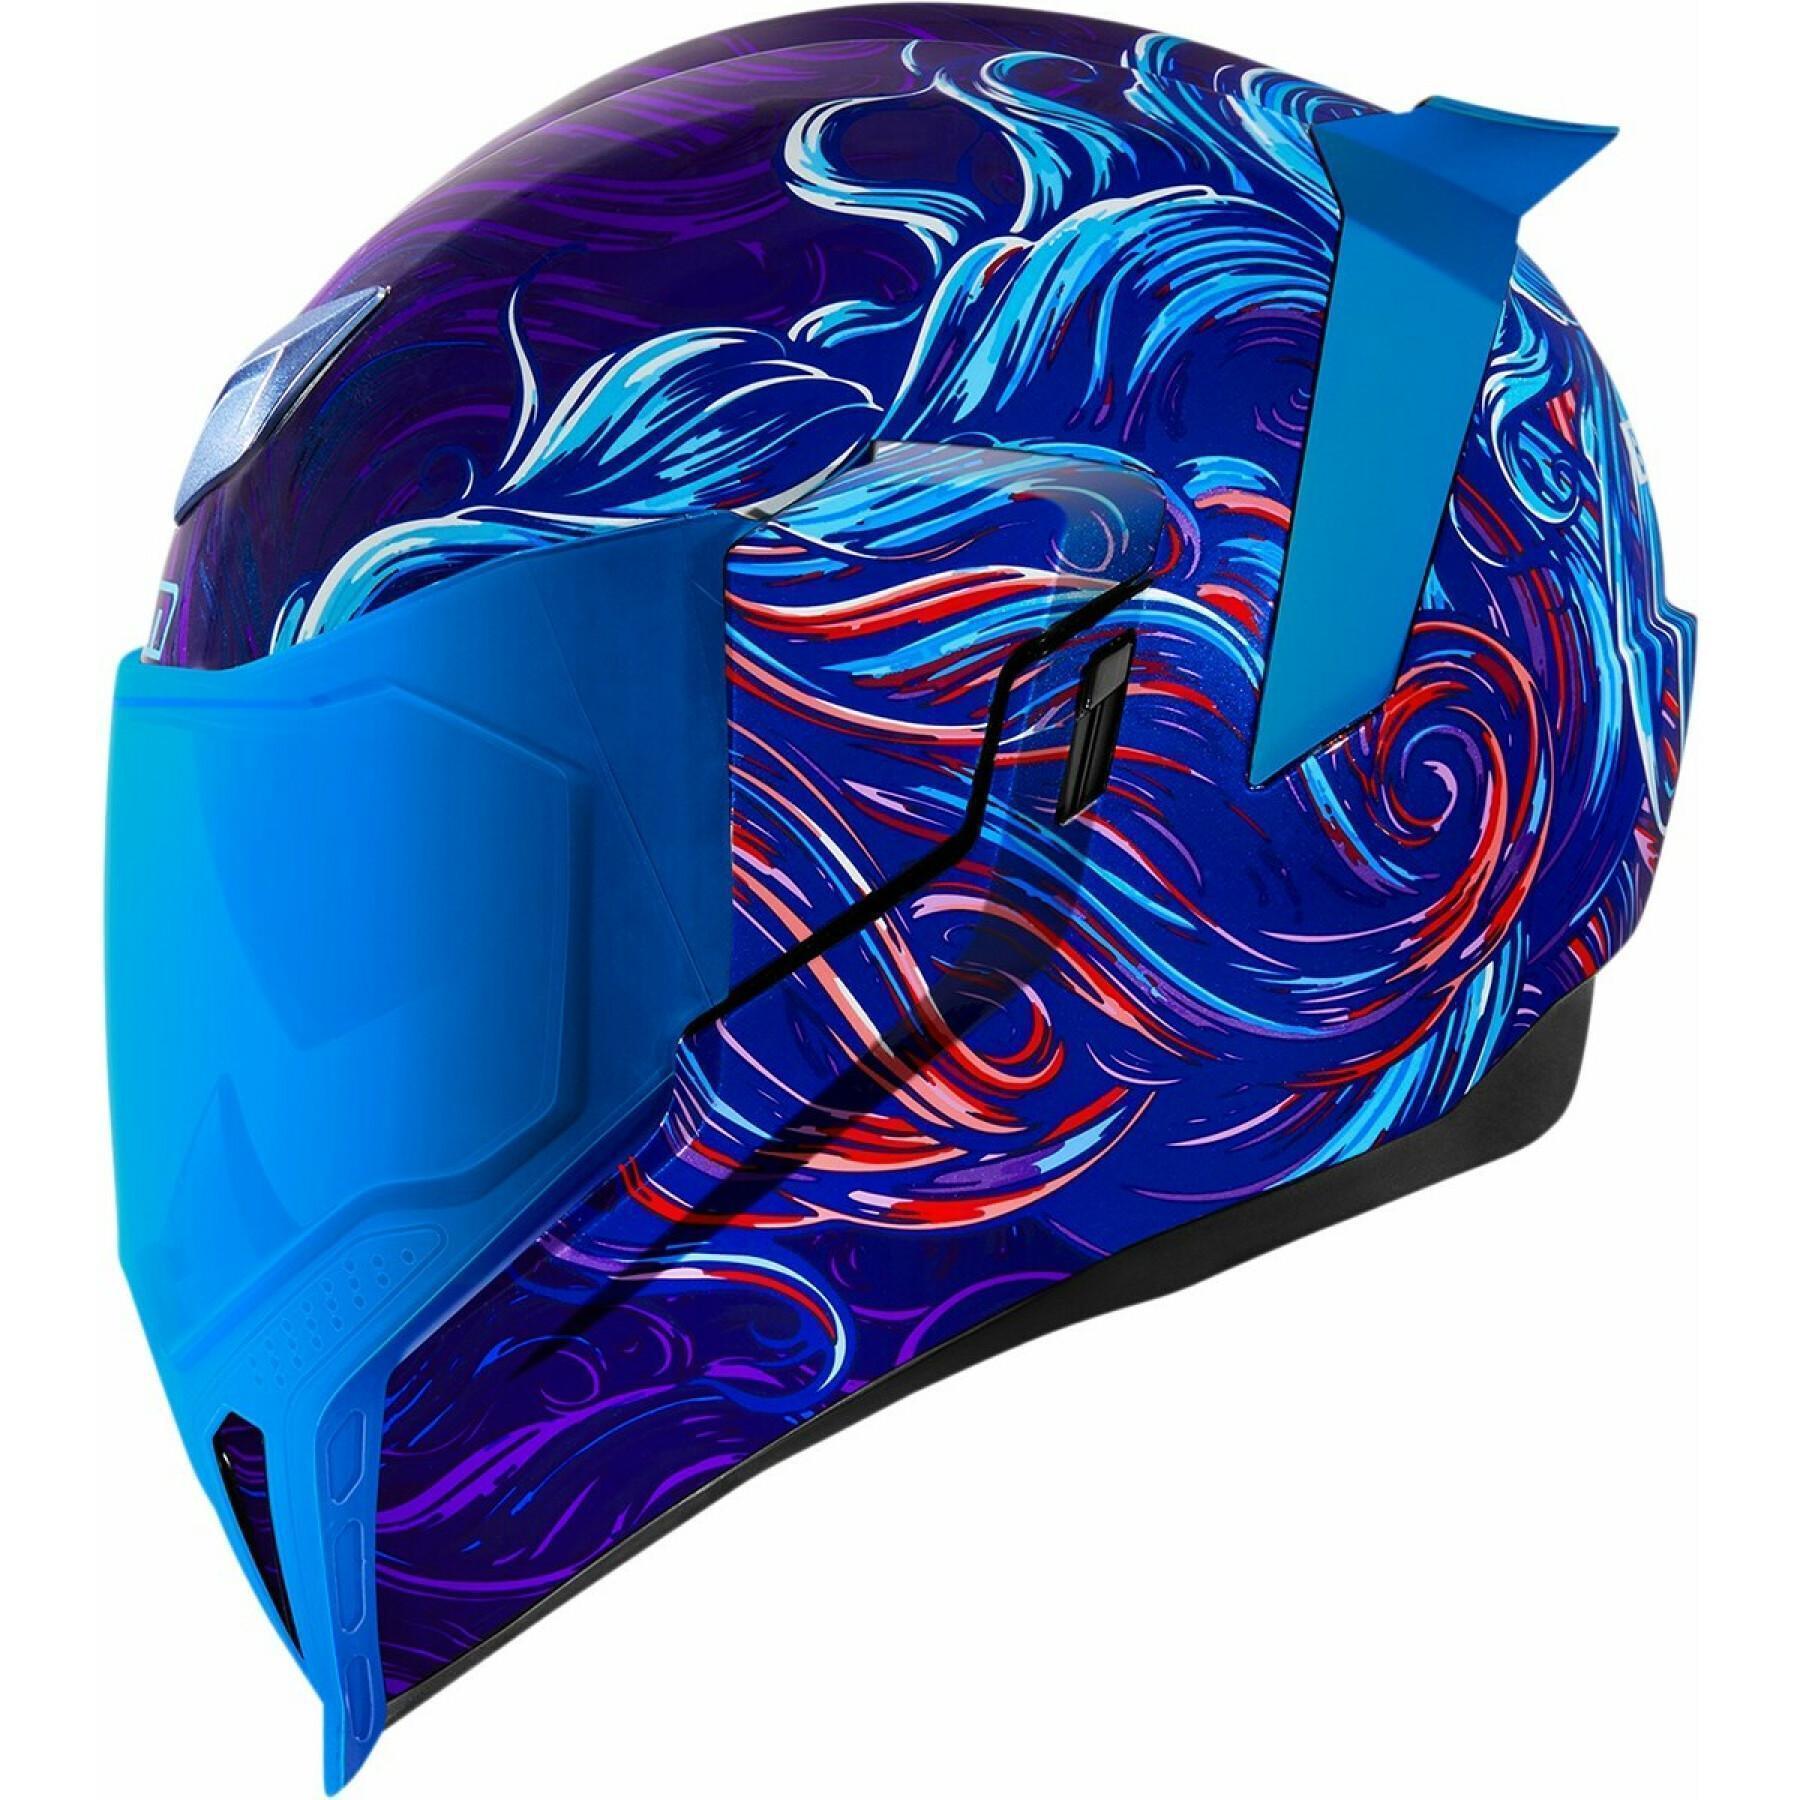 Full face motorcycle helmet Icon Airflite Betta